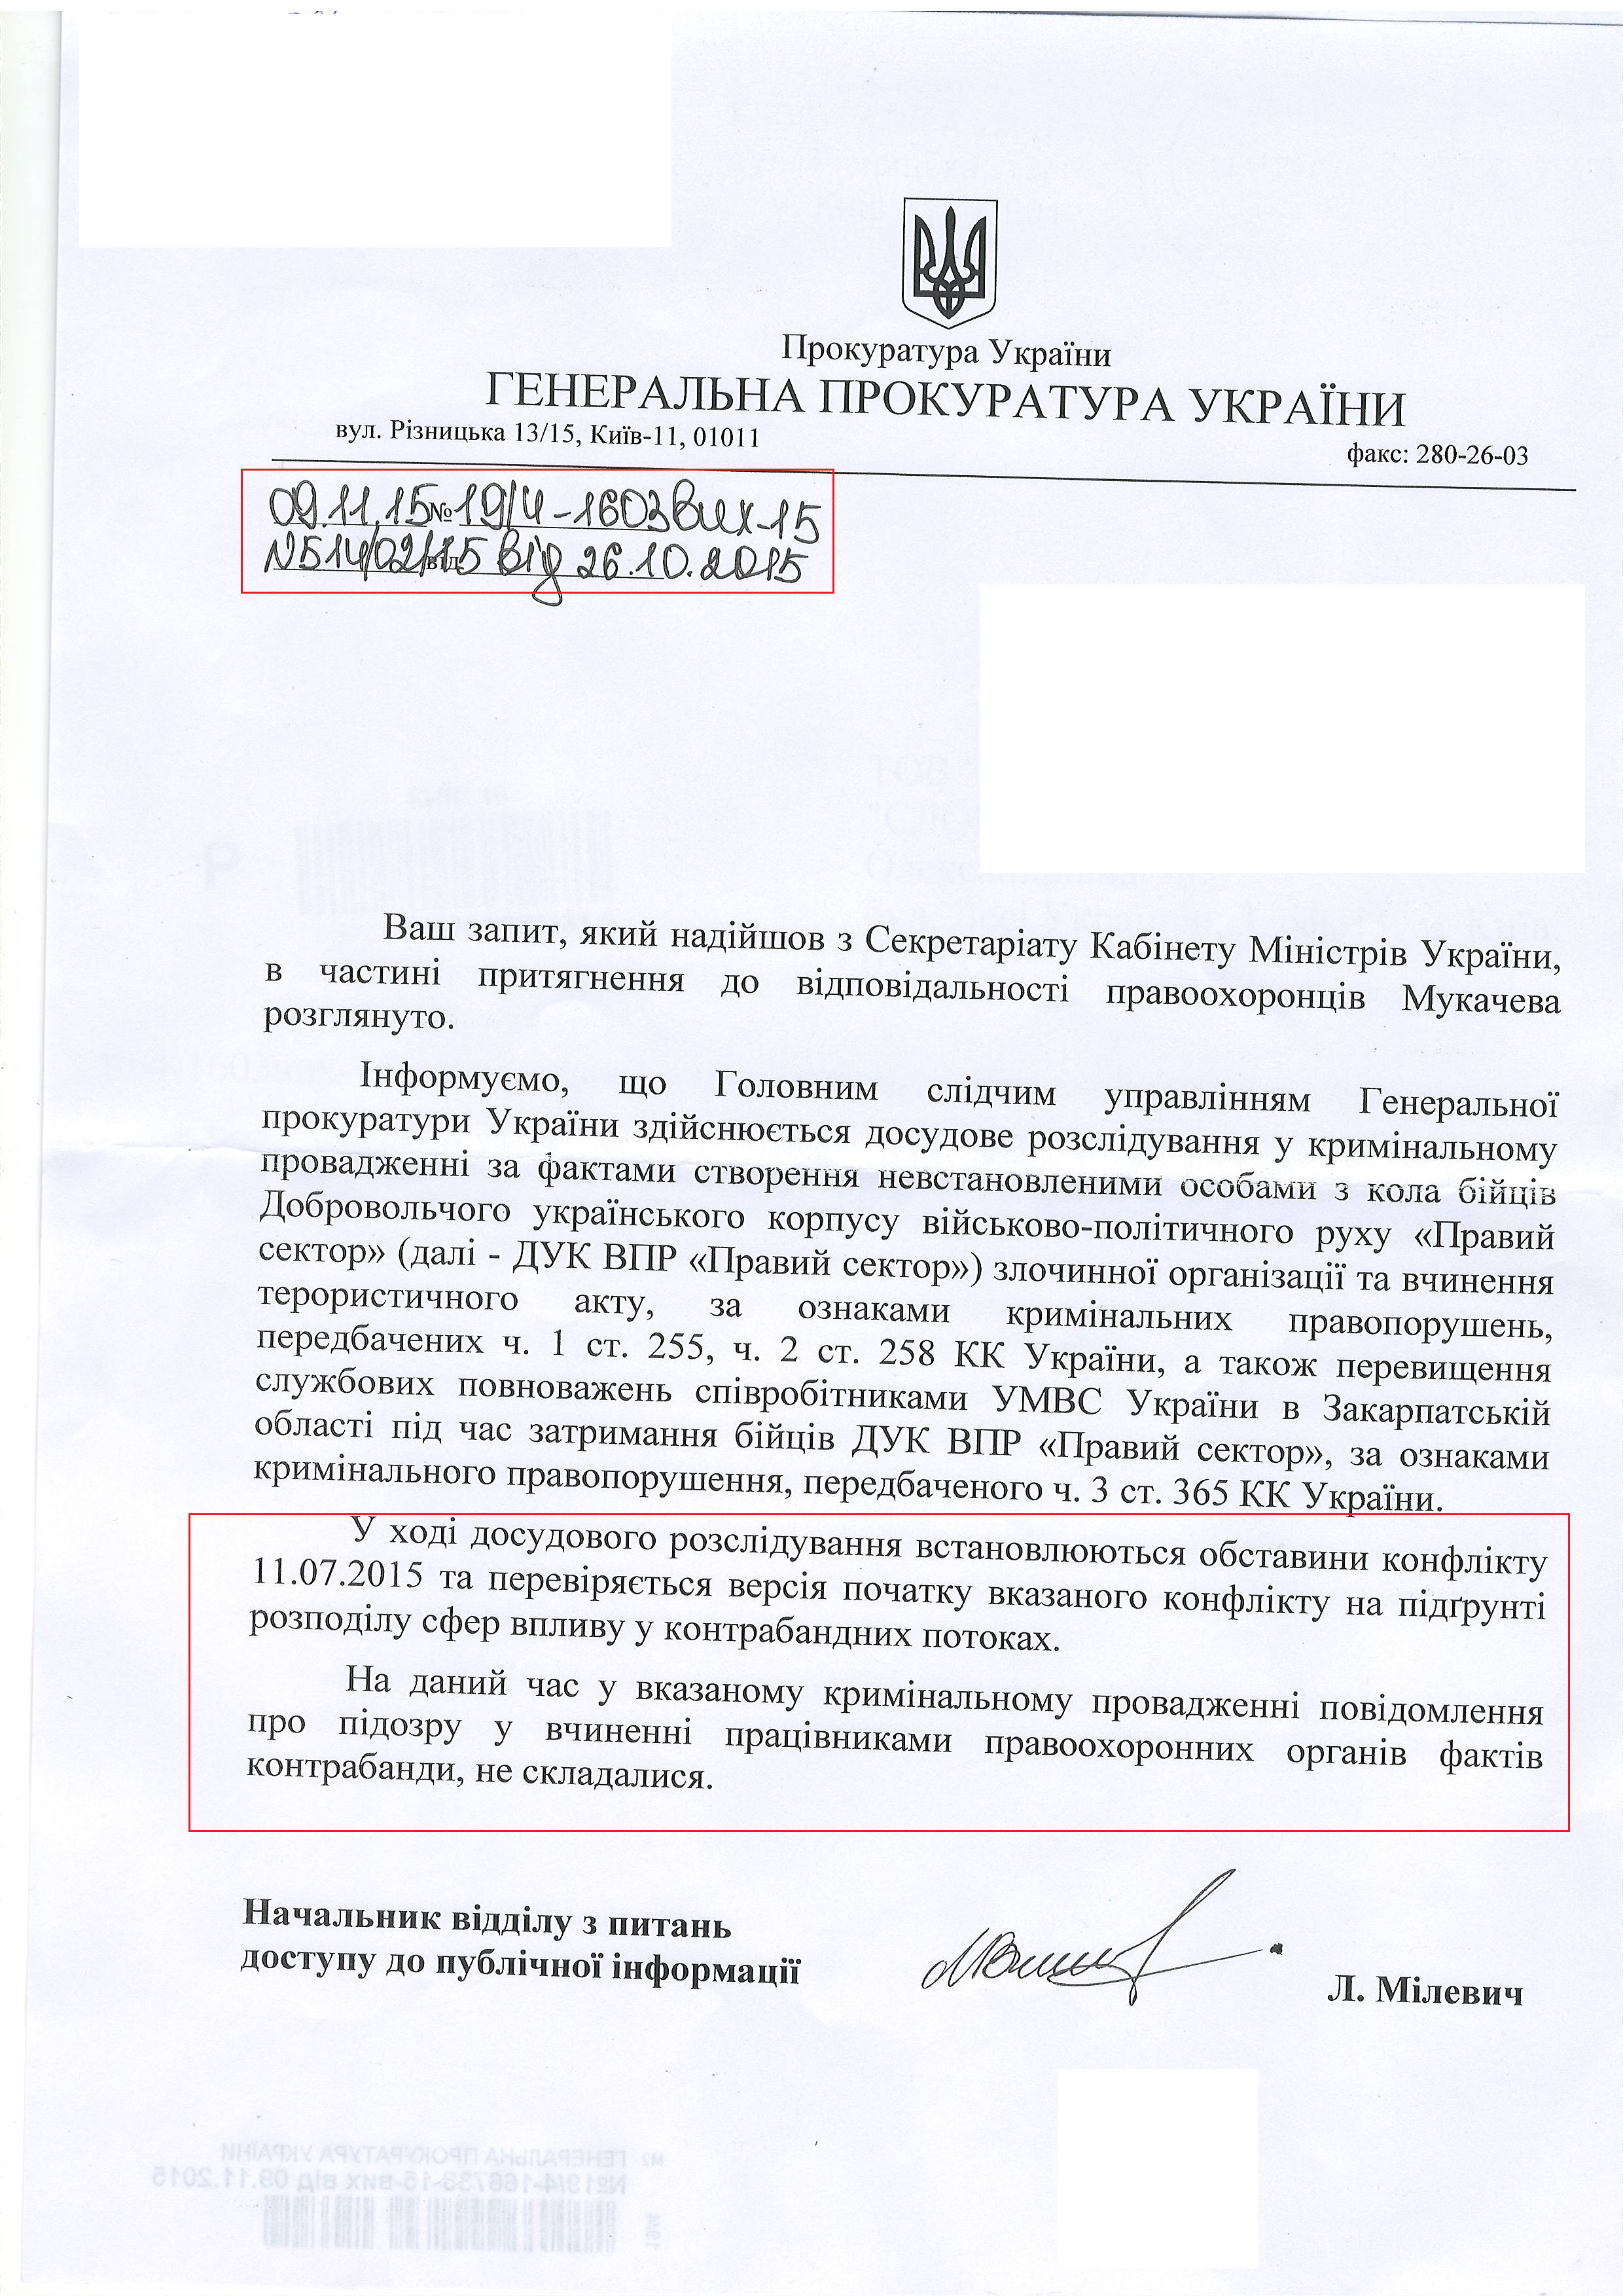 Лист Генеральної прокуратури України від 9 листопада 2015 року